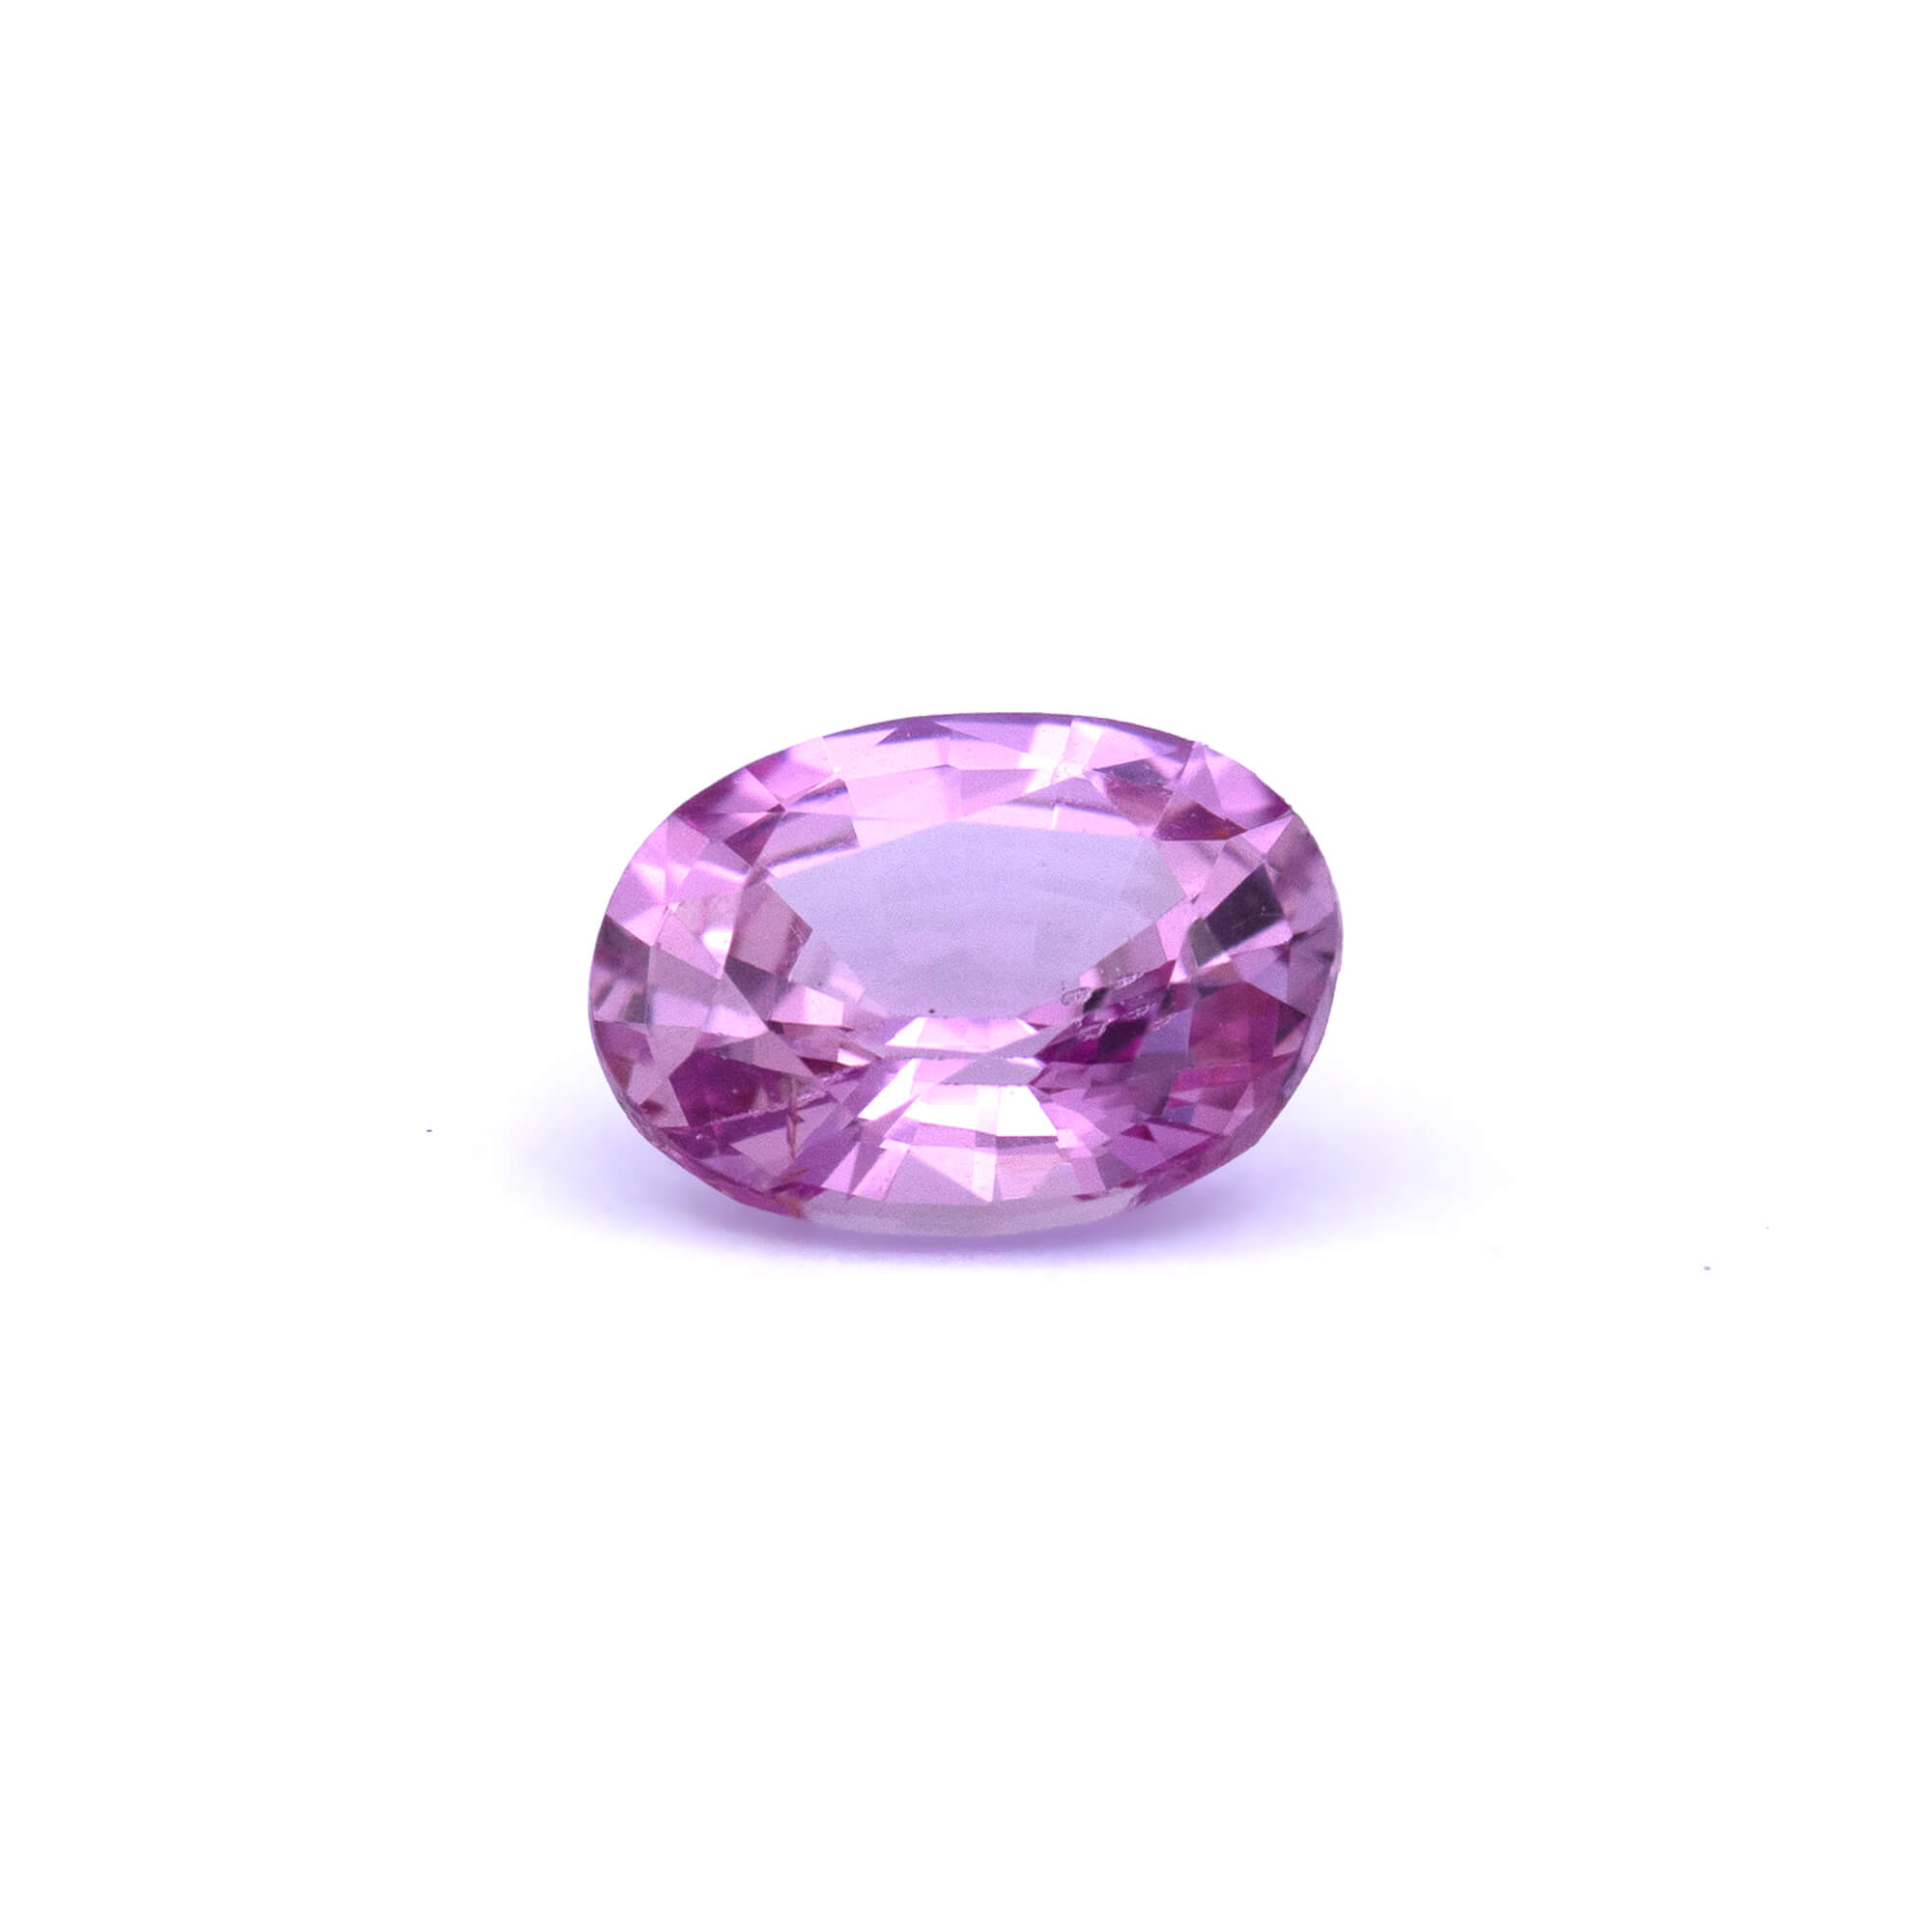 un-heated pink sapphire